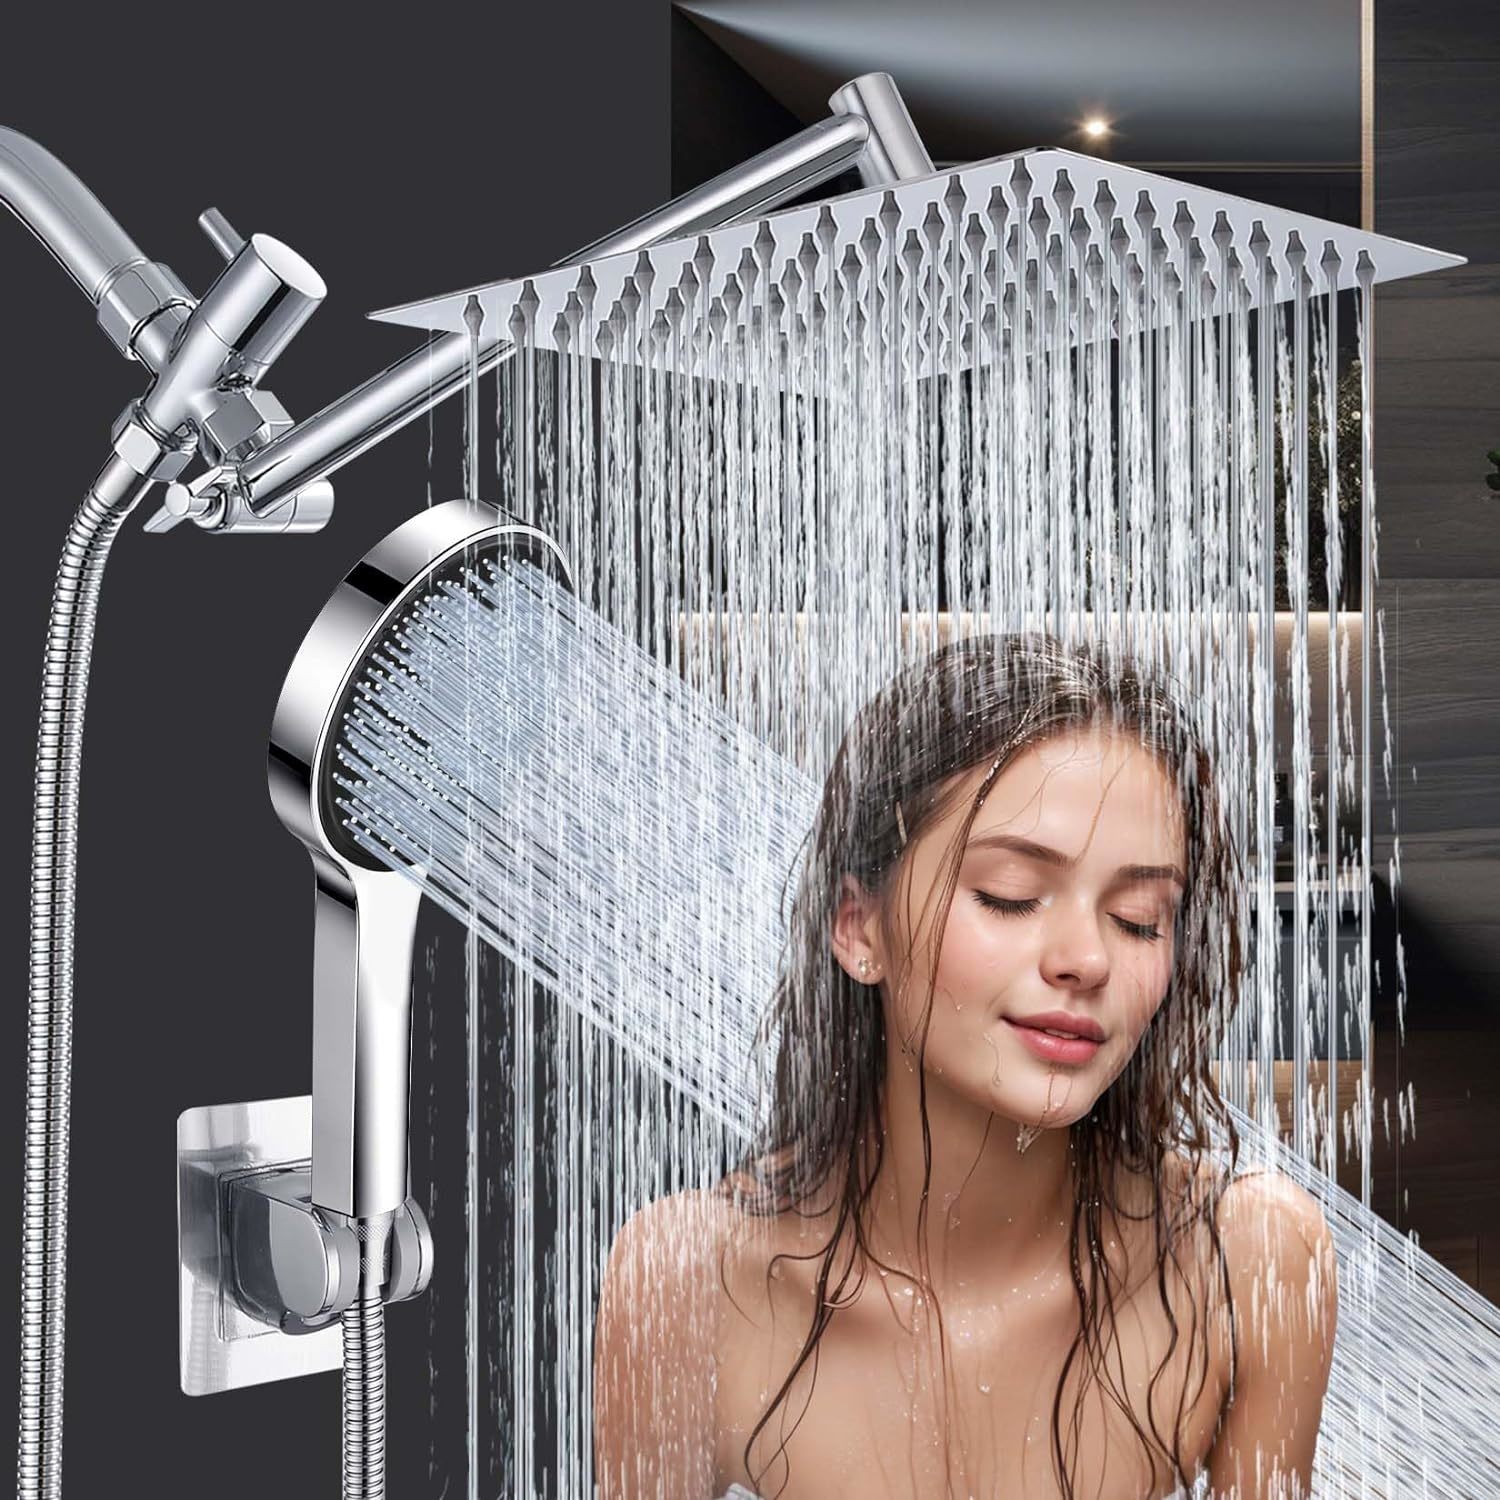 Primary image for Shower Head,10 Inch Rain Shower Head with Handheld Spray Combo,3 Handheld Water